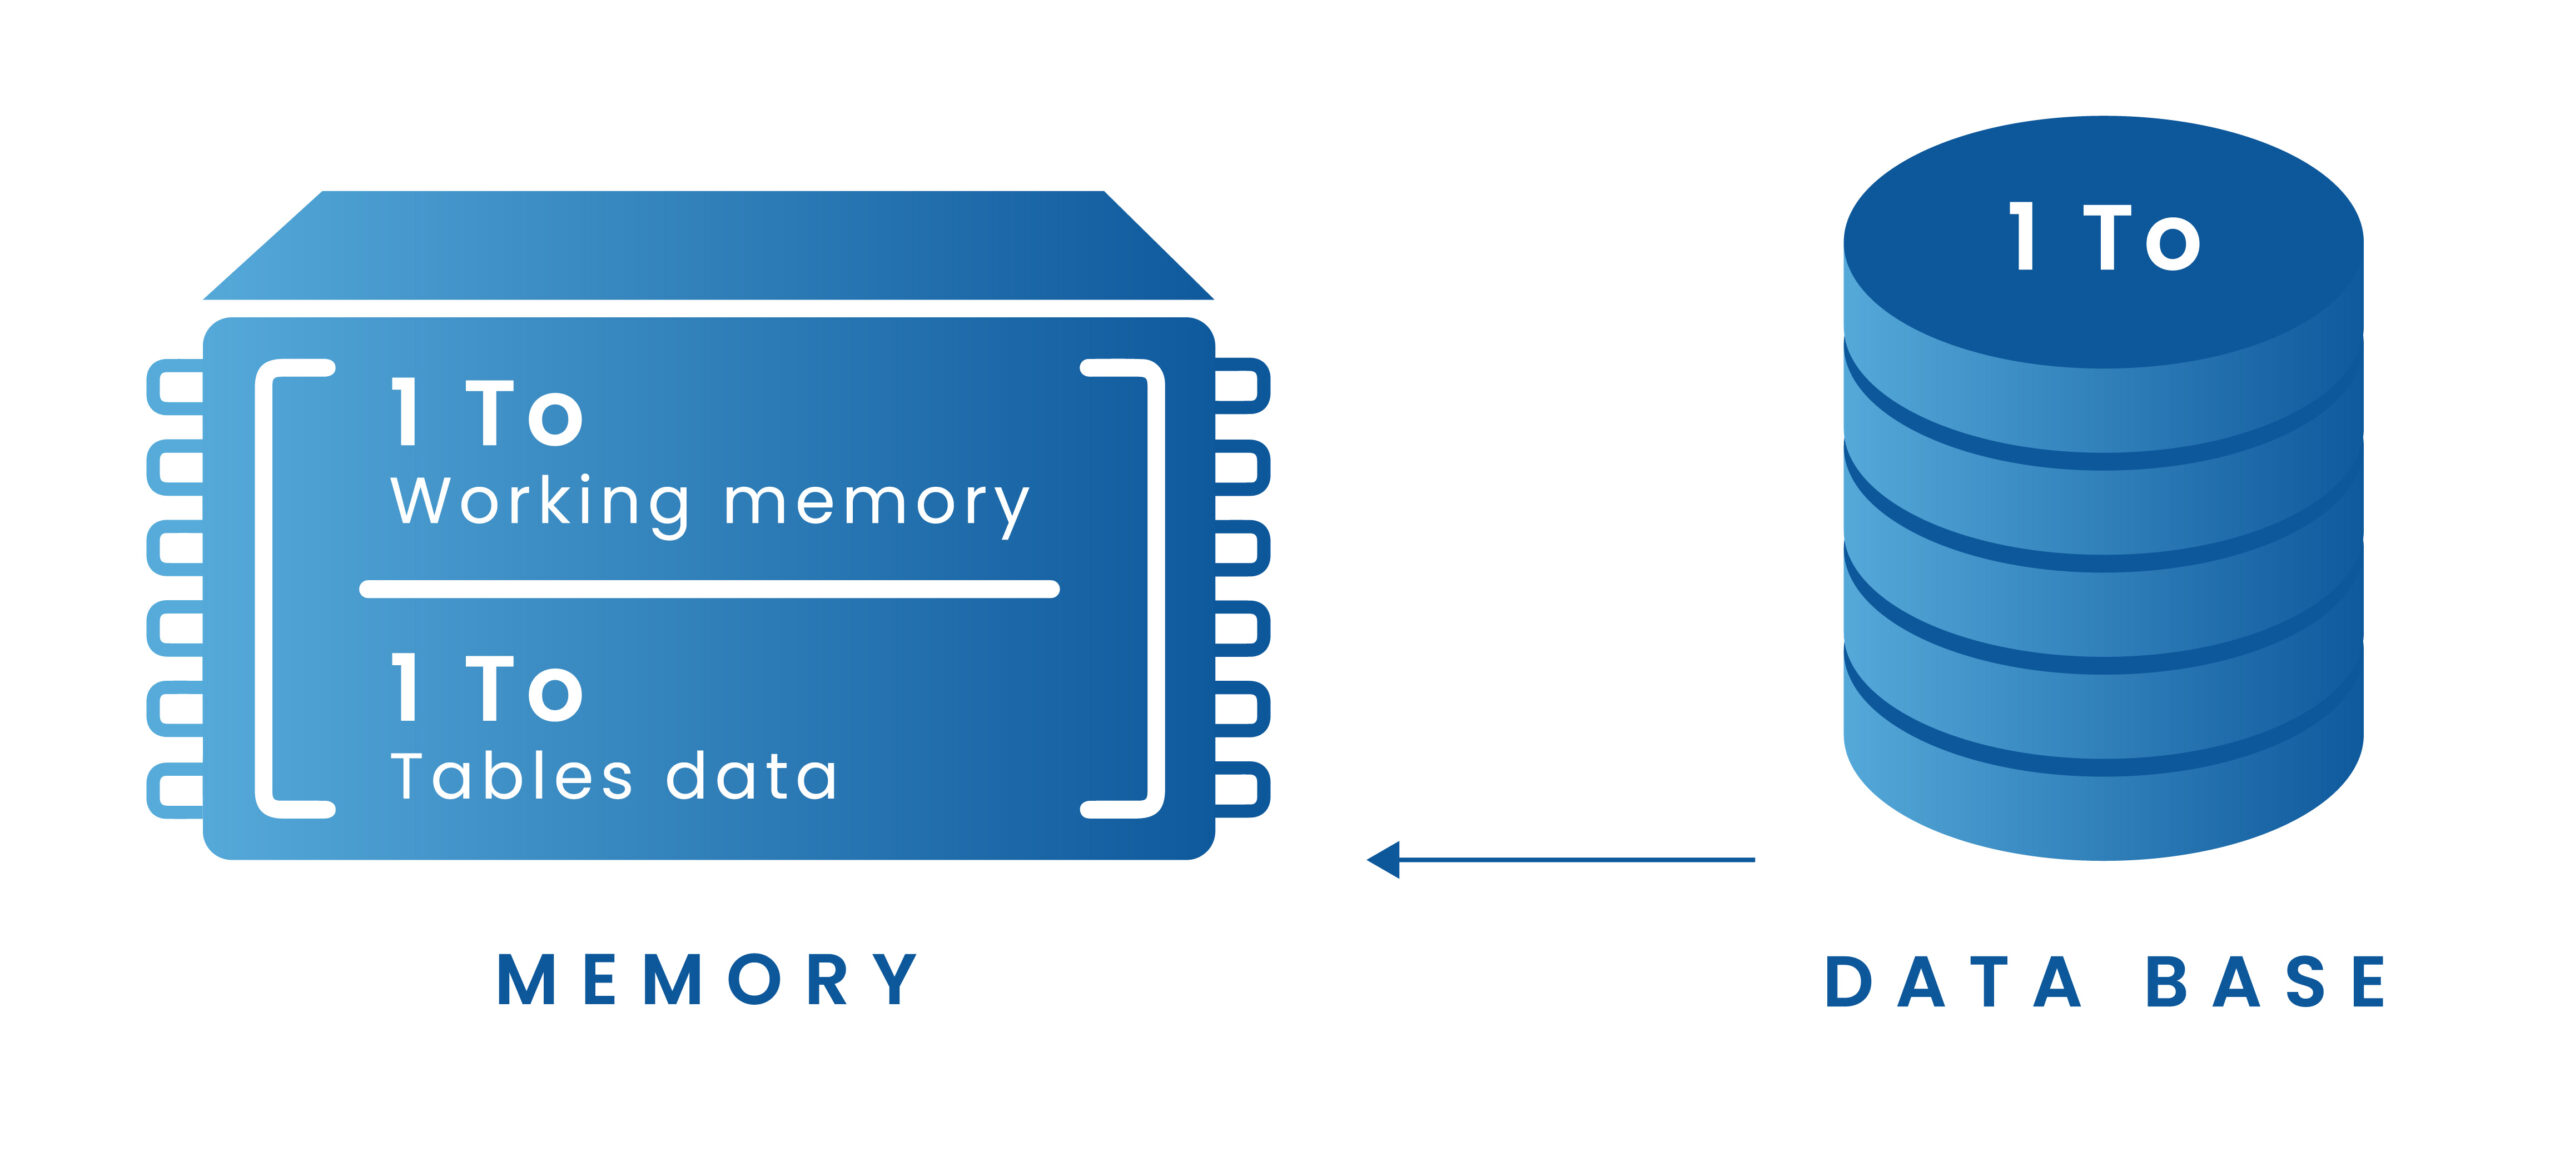 HANA Database and memory growth